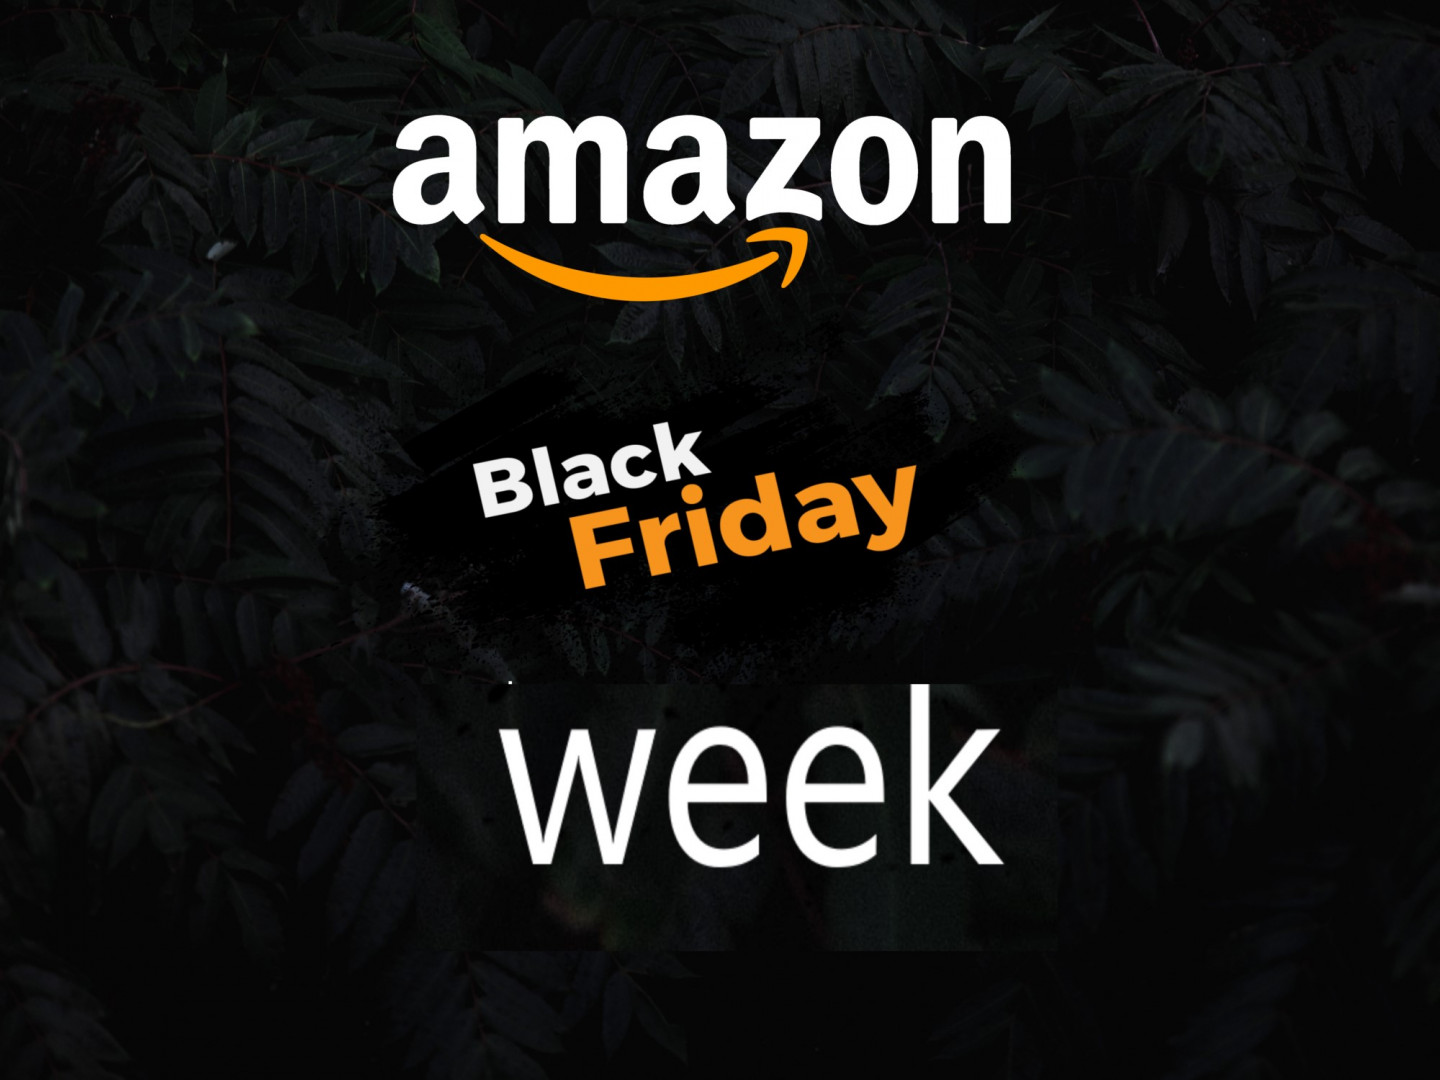 Black friday week bij Amazon, tot 36% korting op LEGO sets!